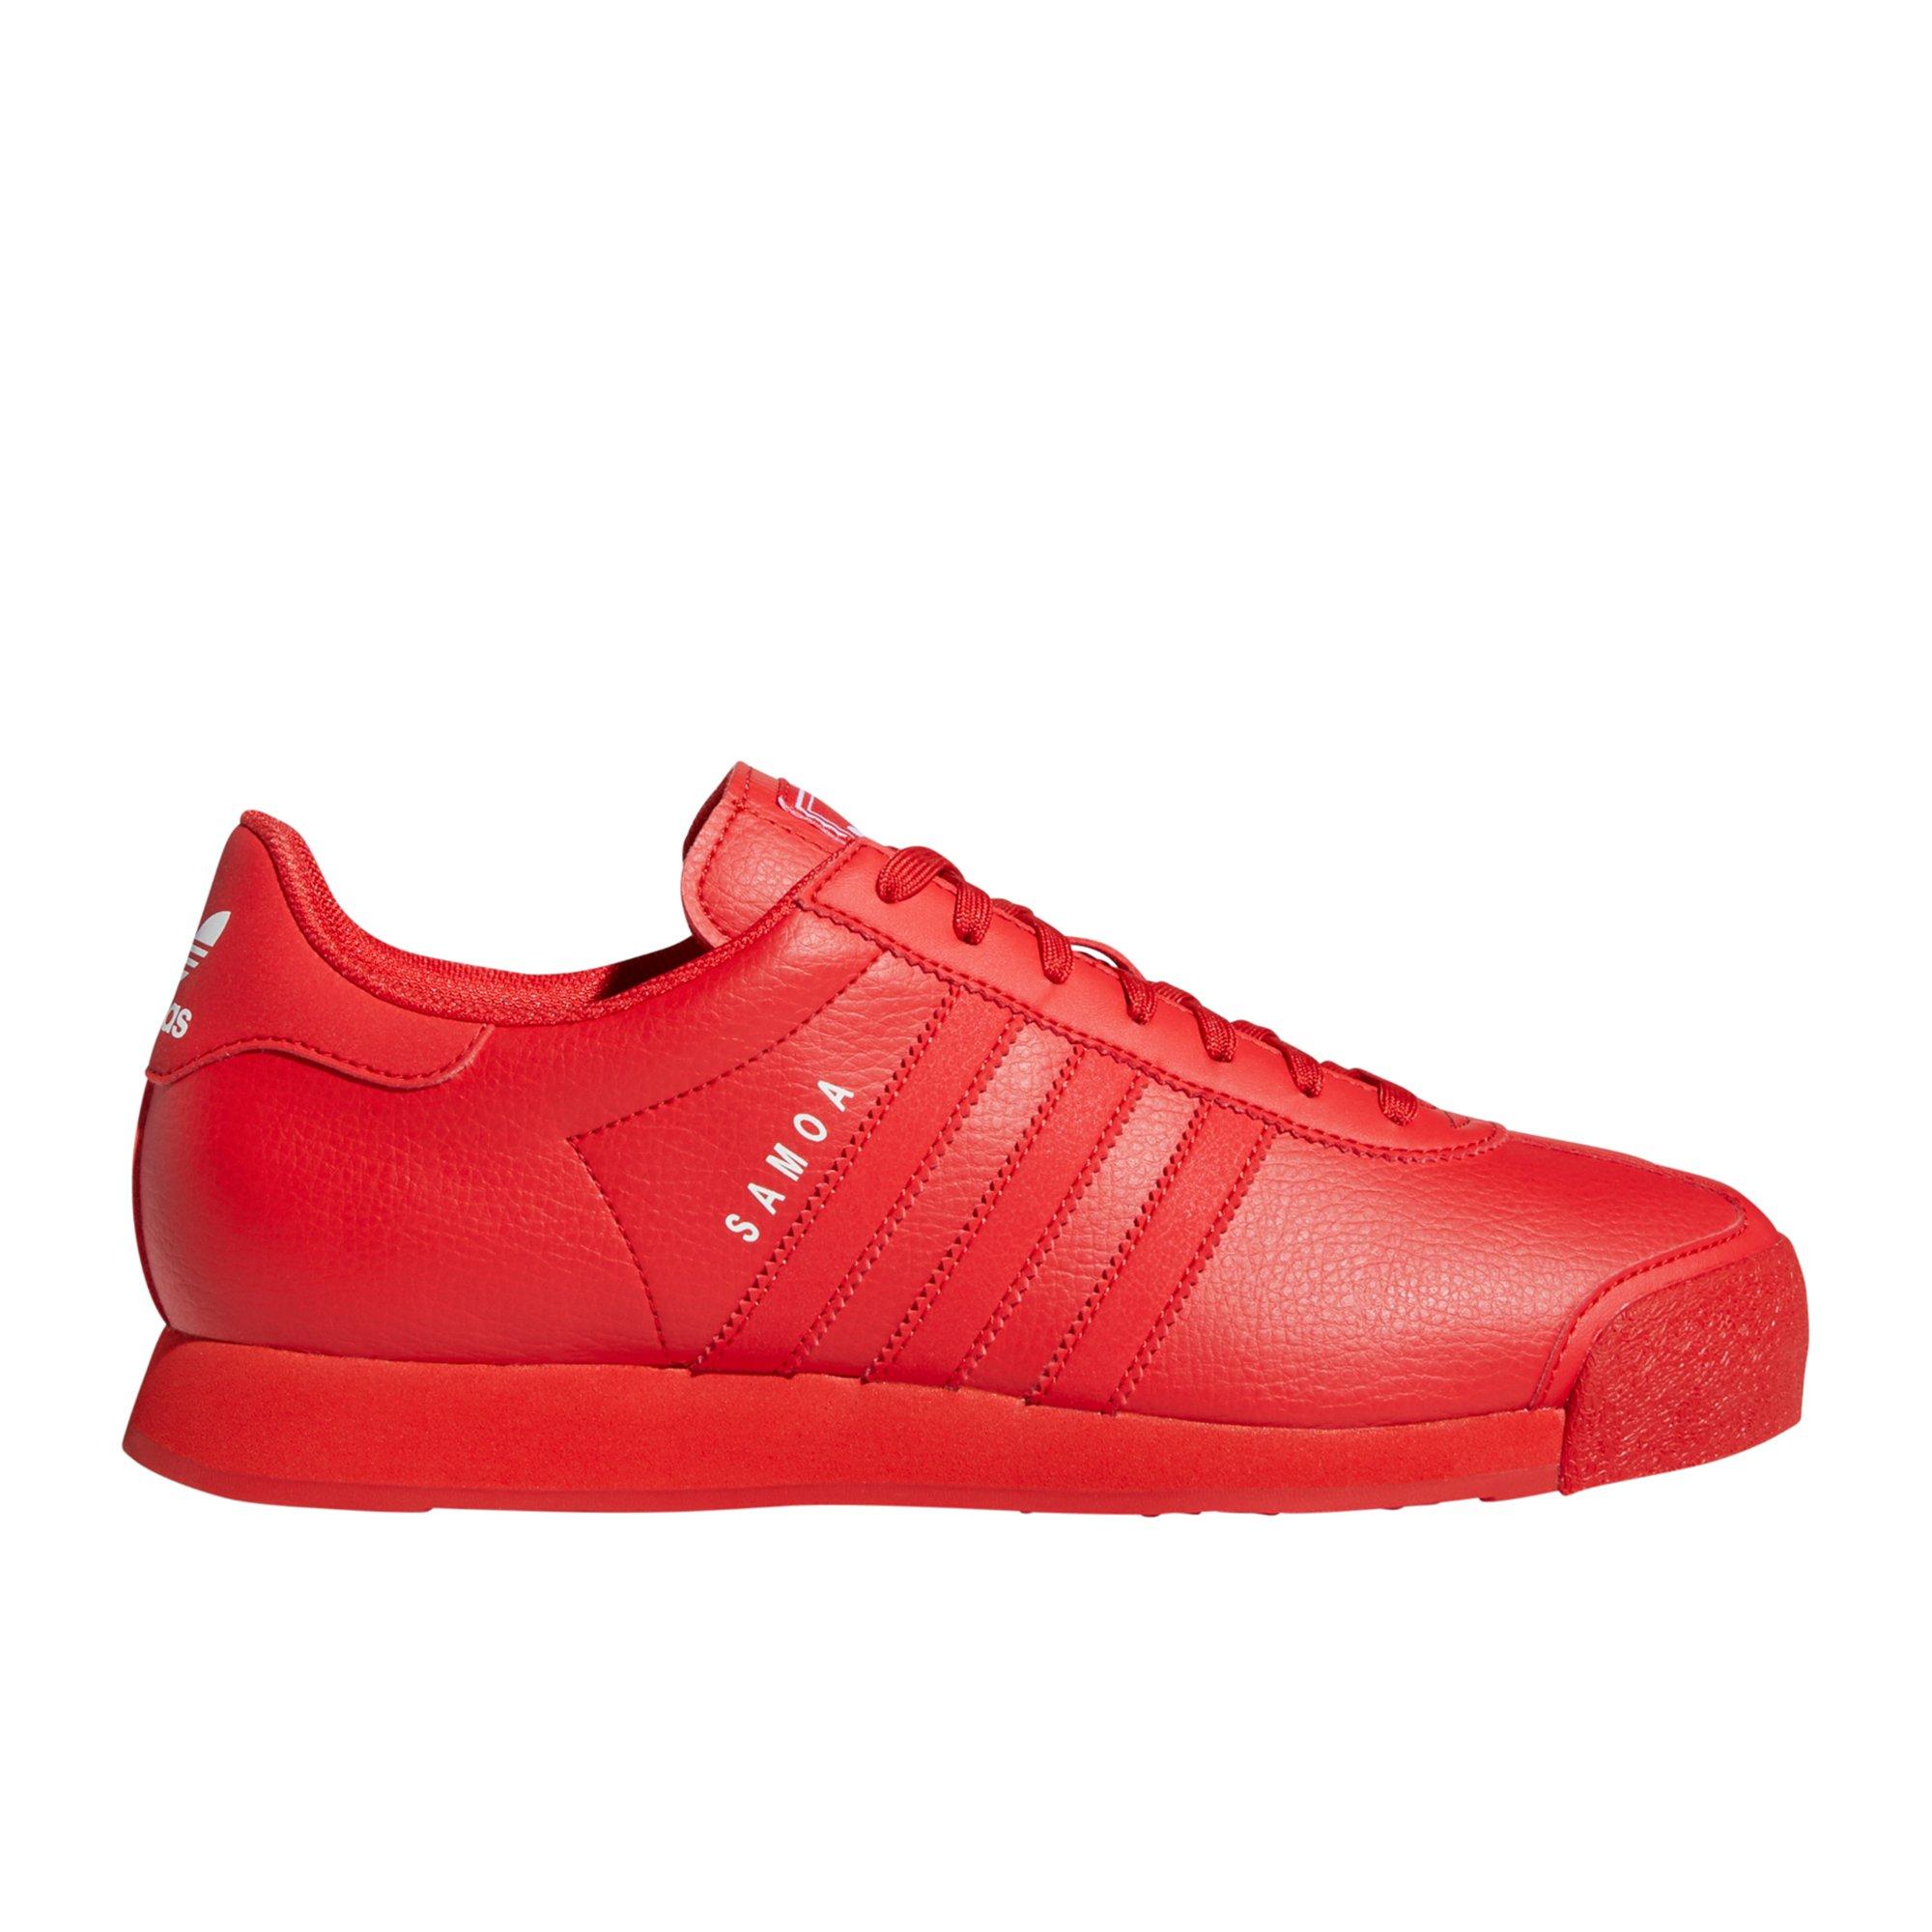 red samoa adidas shoes